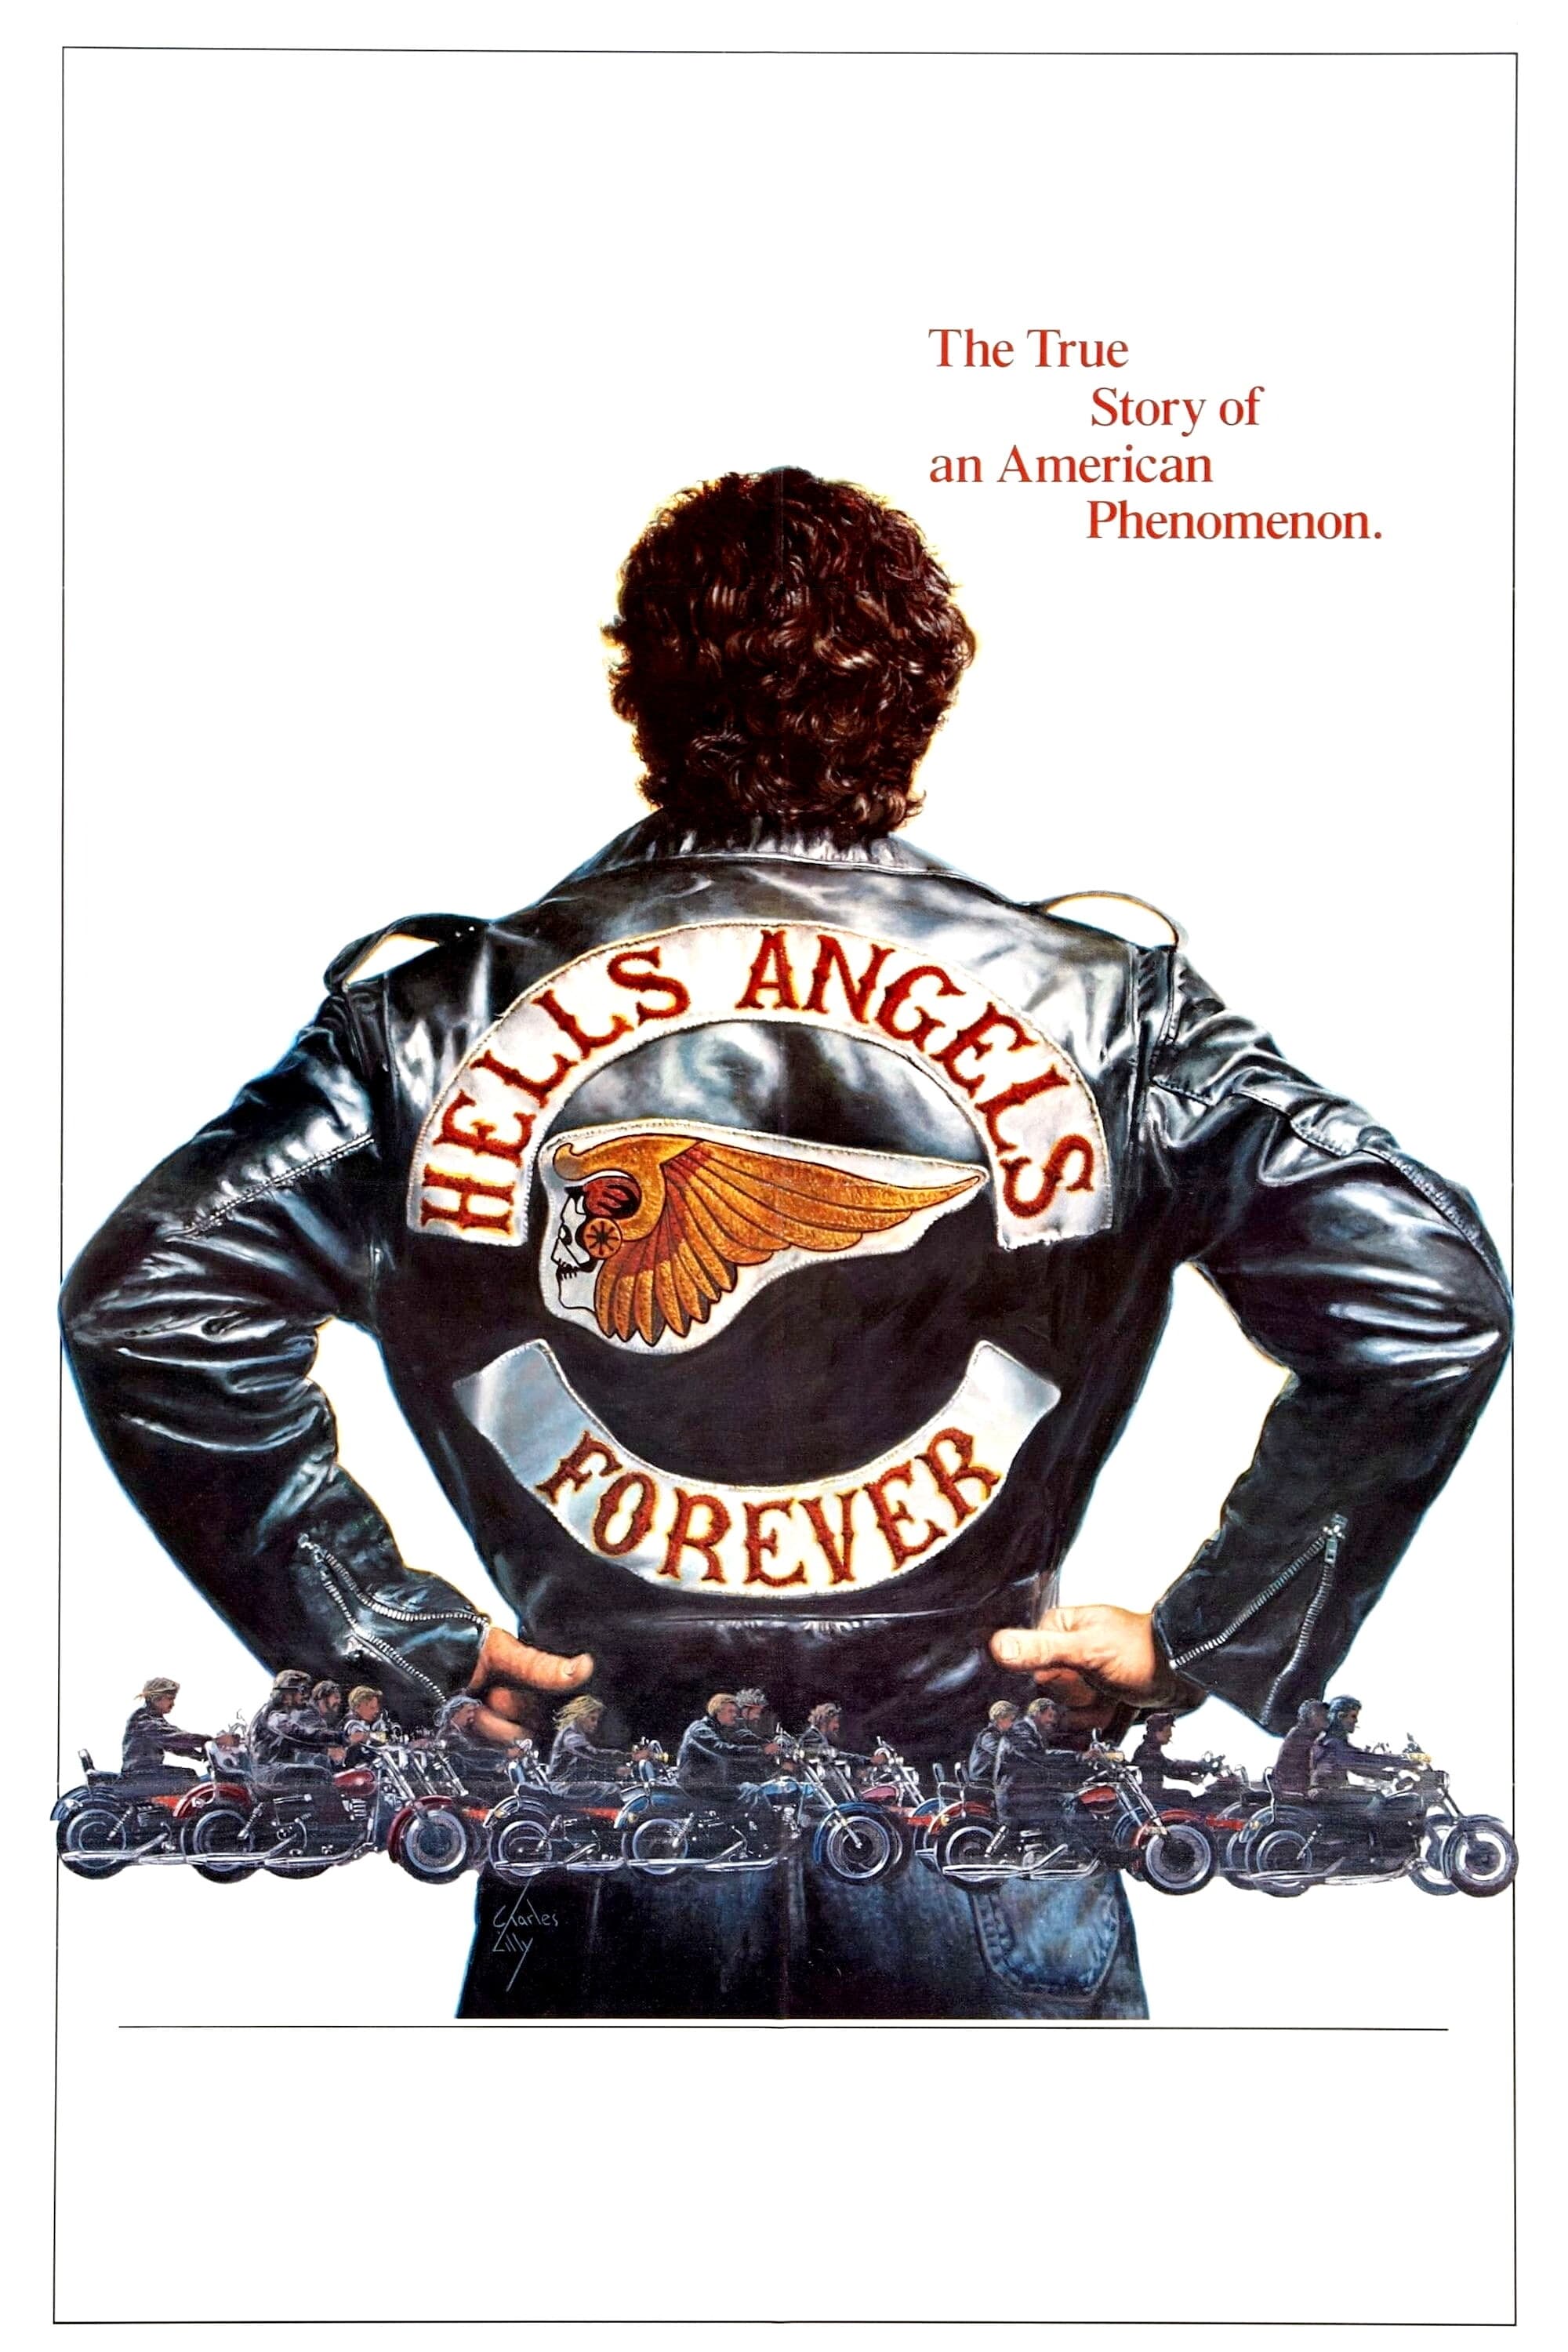 Hells Angels Forever (1983) Film. Où Regarder le Streaming Online